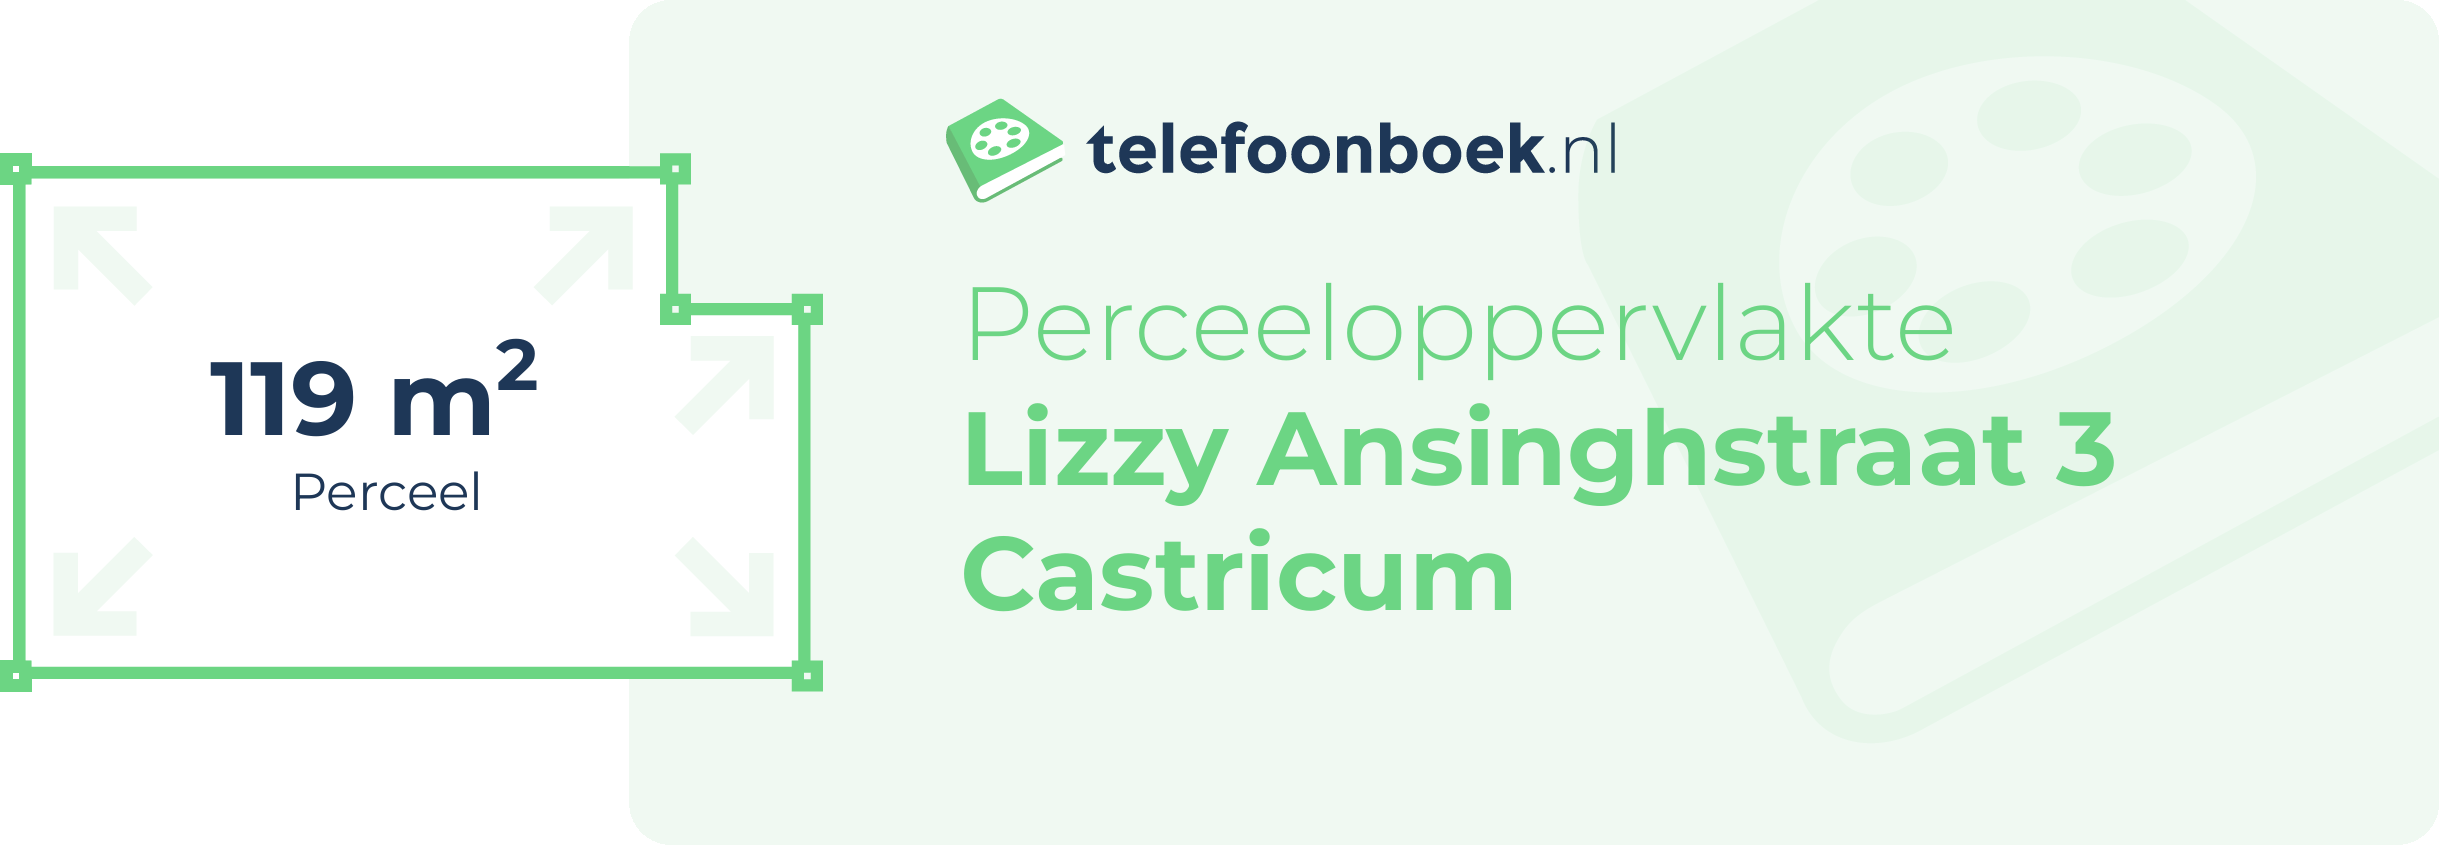 Perceeloppervlakte Lizzy Ansinghstraat 3 Castricum